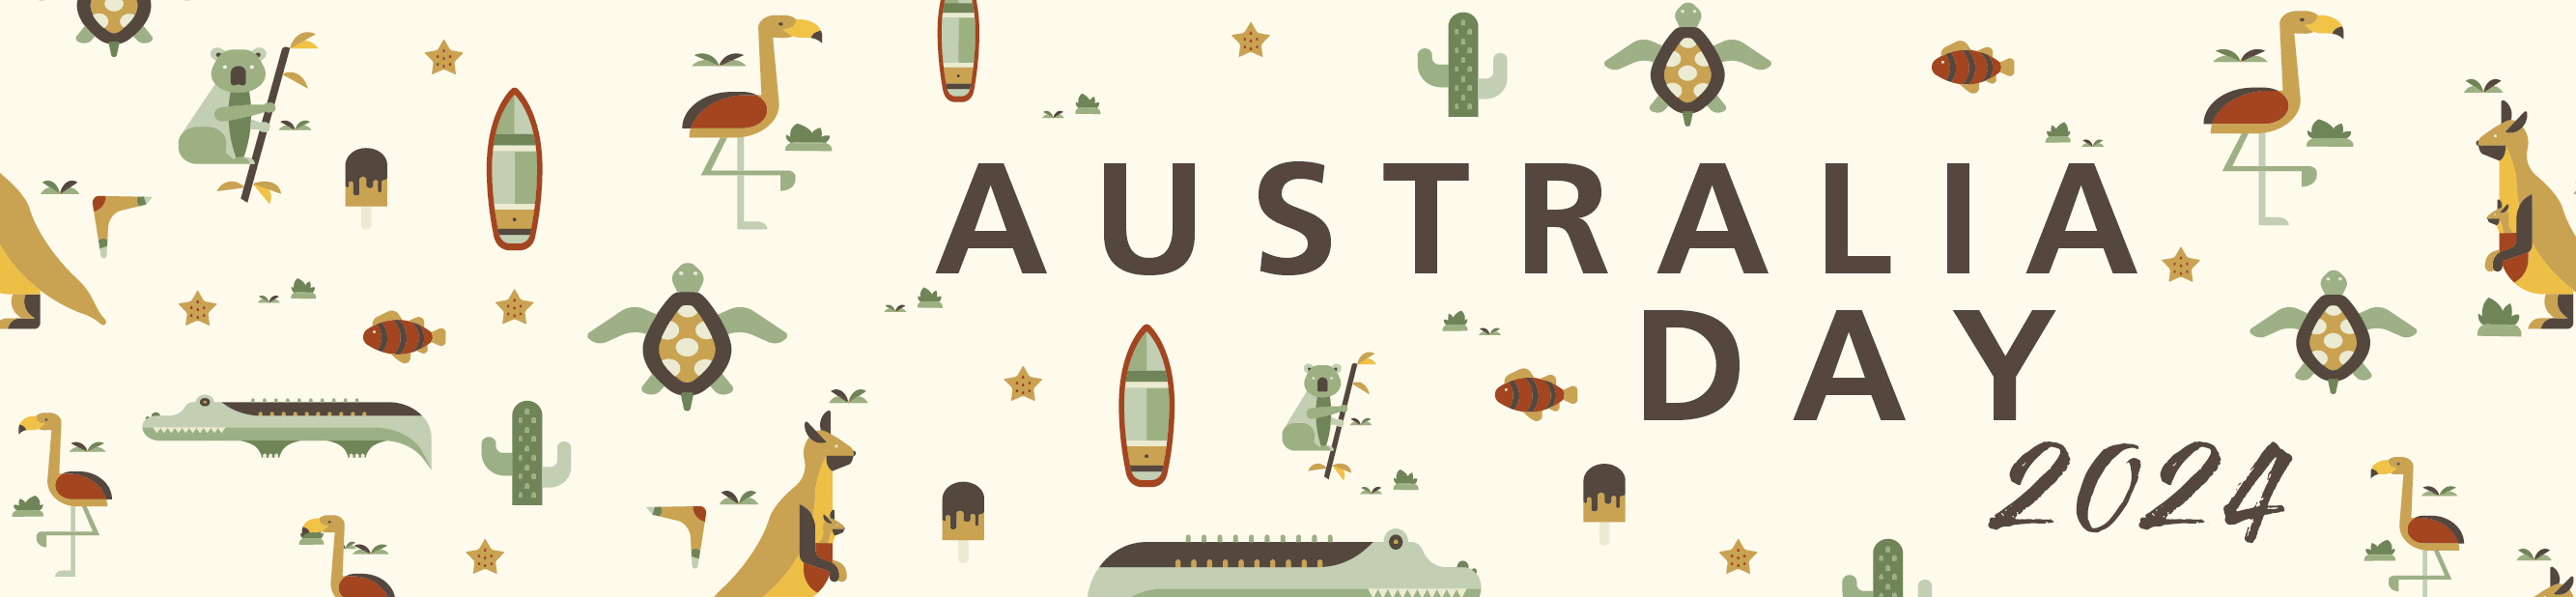 Australia day website page banner 2024 1